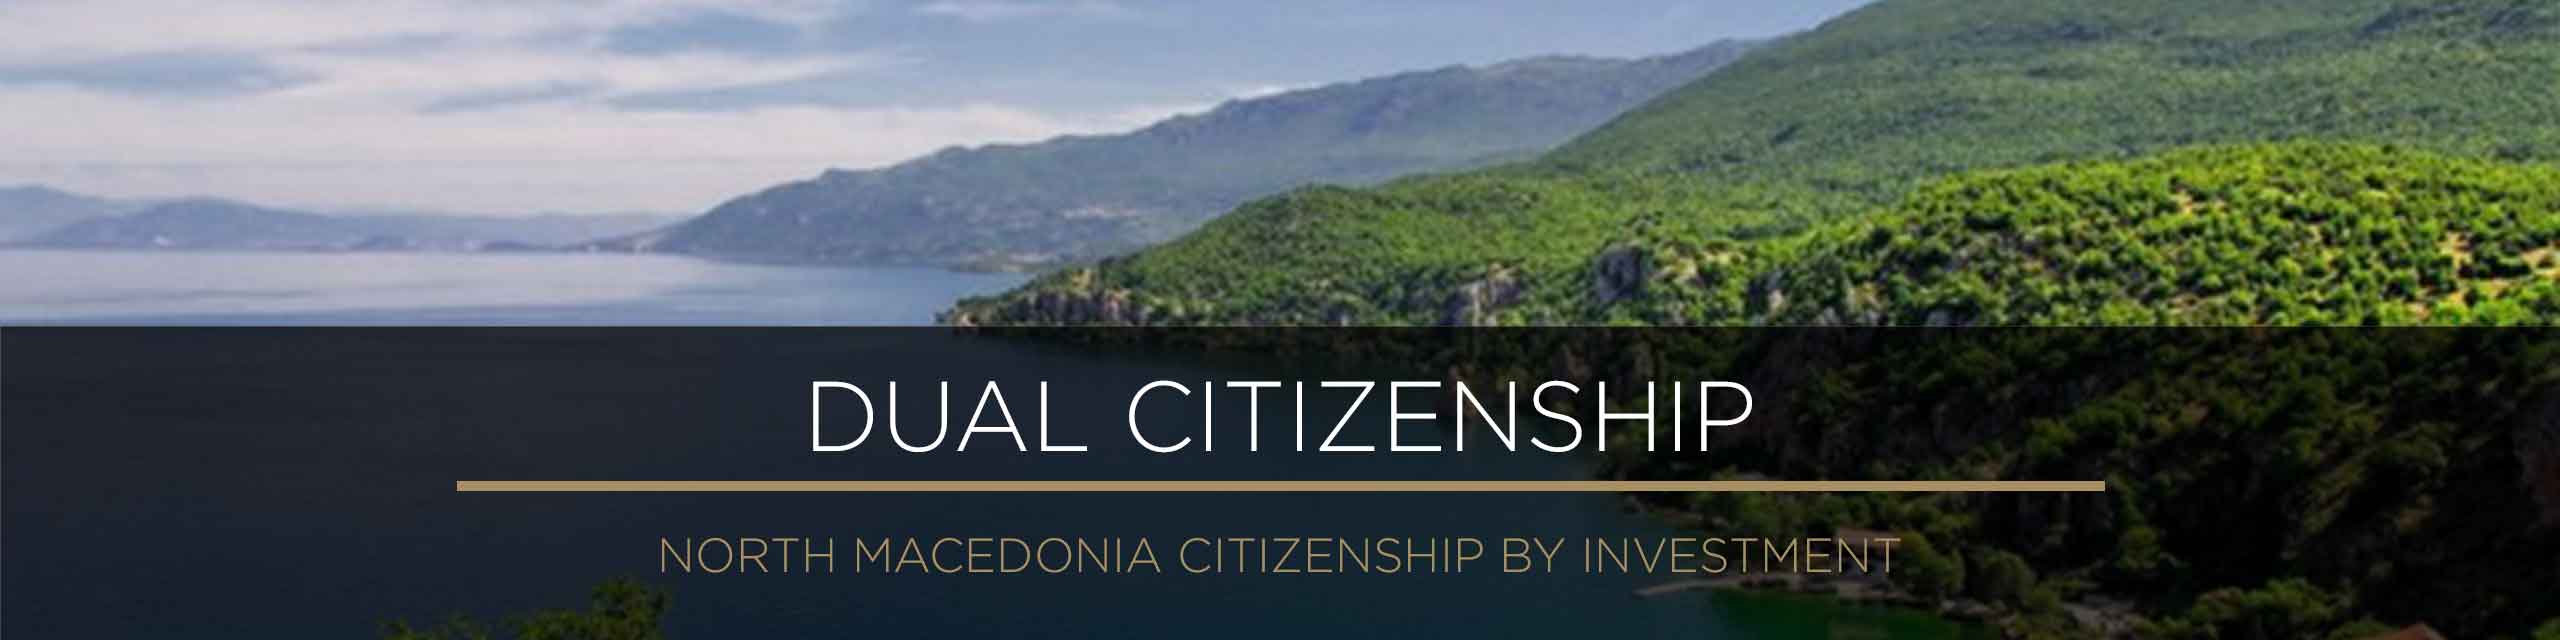 Dual Citizenship North Macedonia